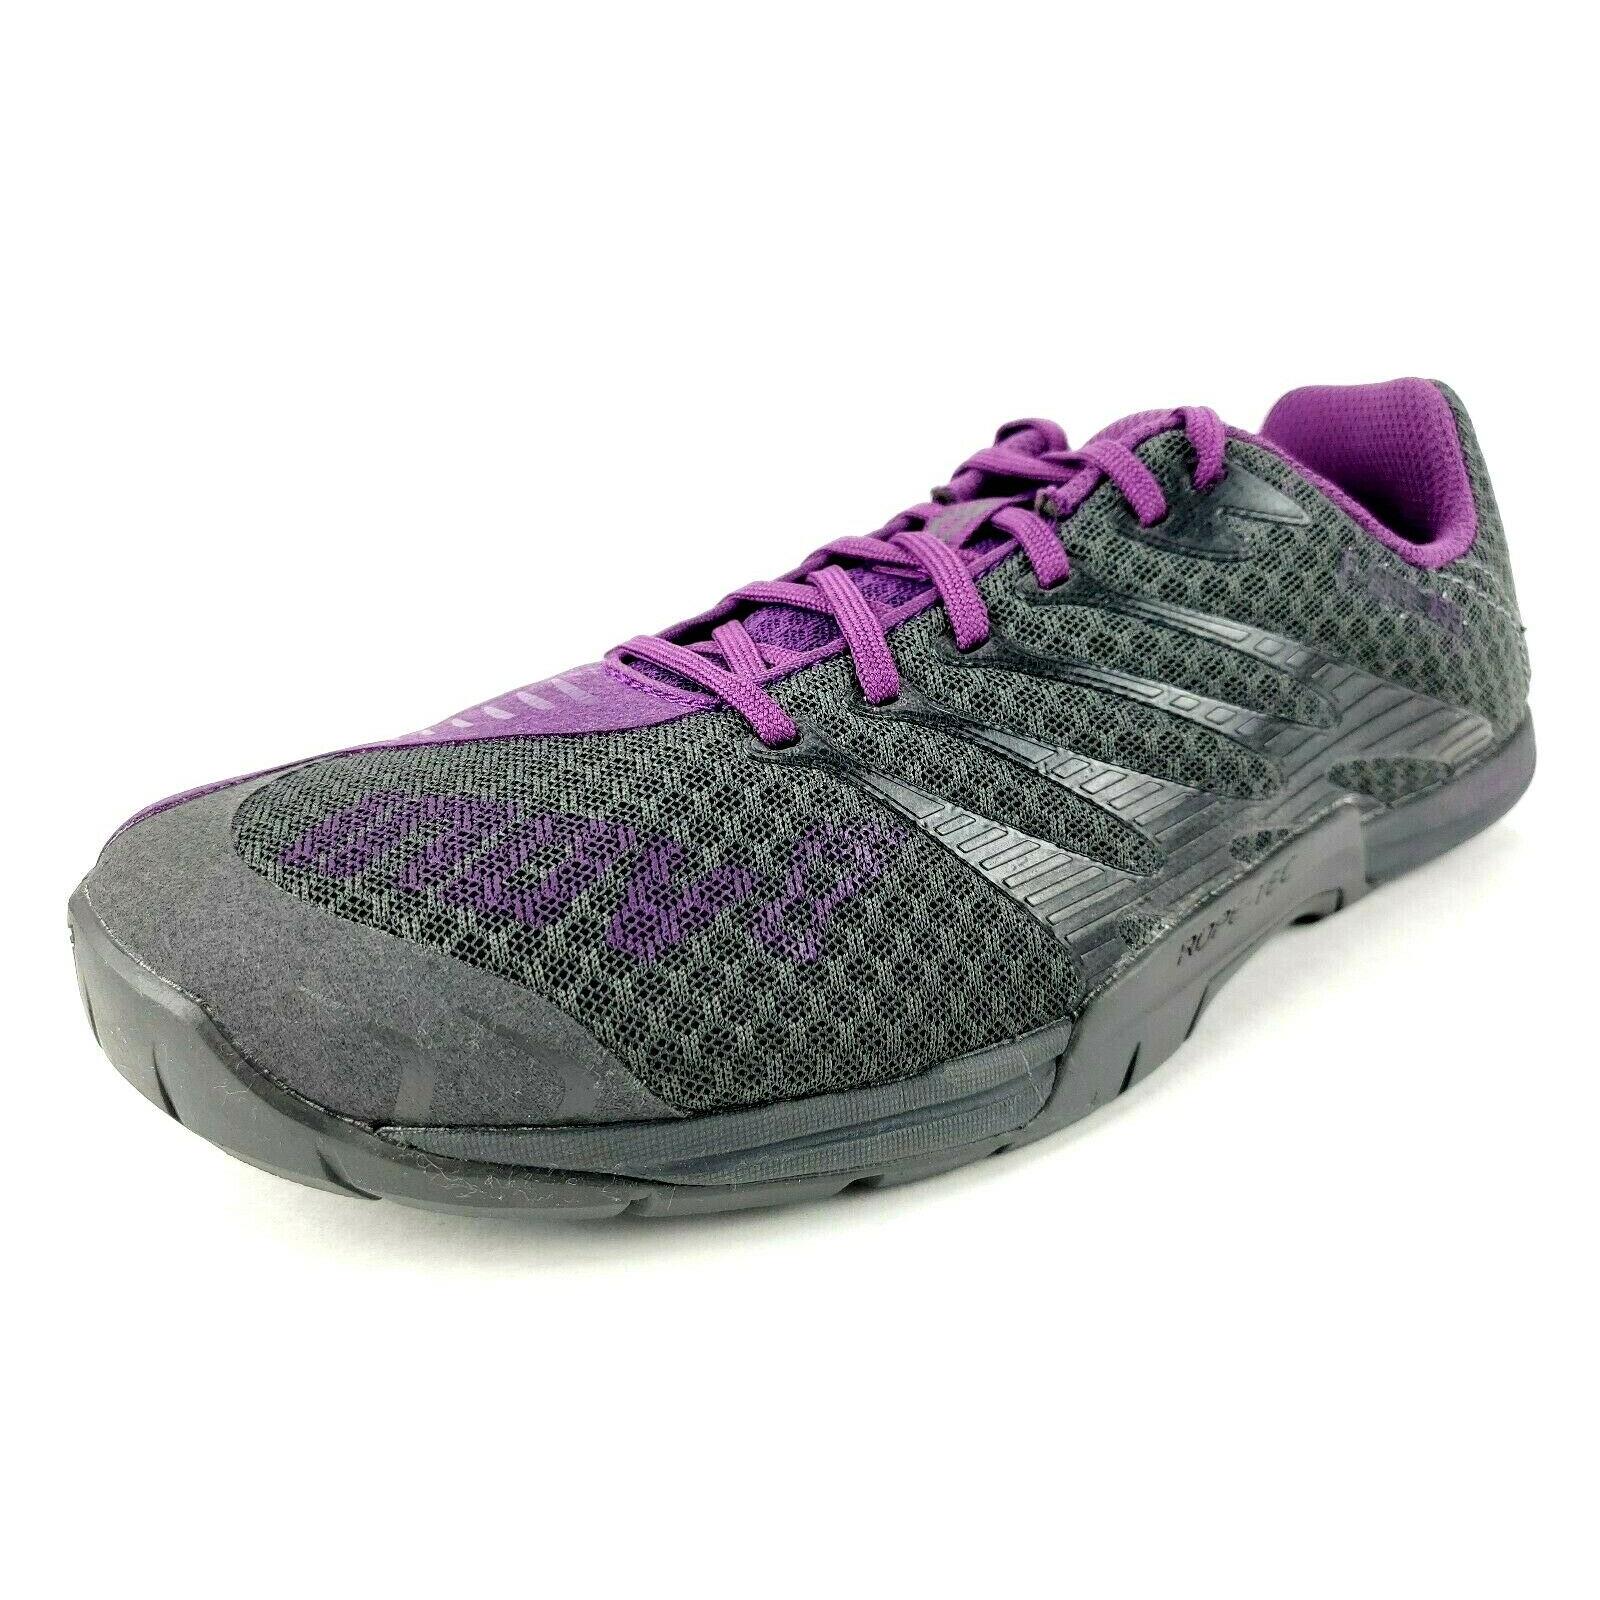 Inov-8 Women`s F-lite 235 Grey / Purple Size 7.5 Road Running Shoe Retail